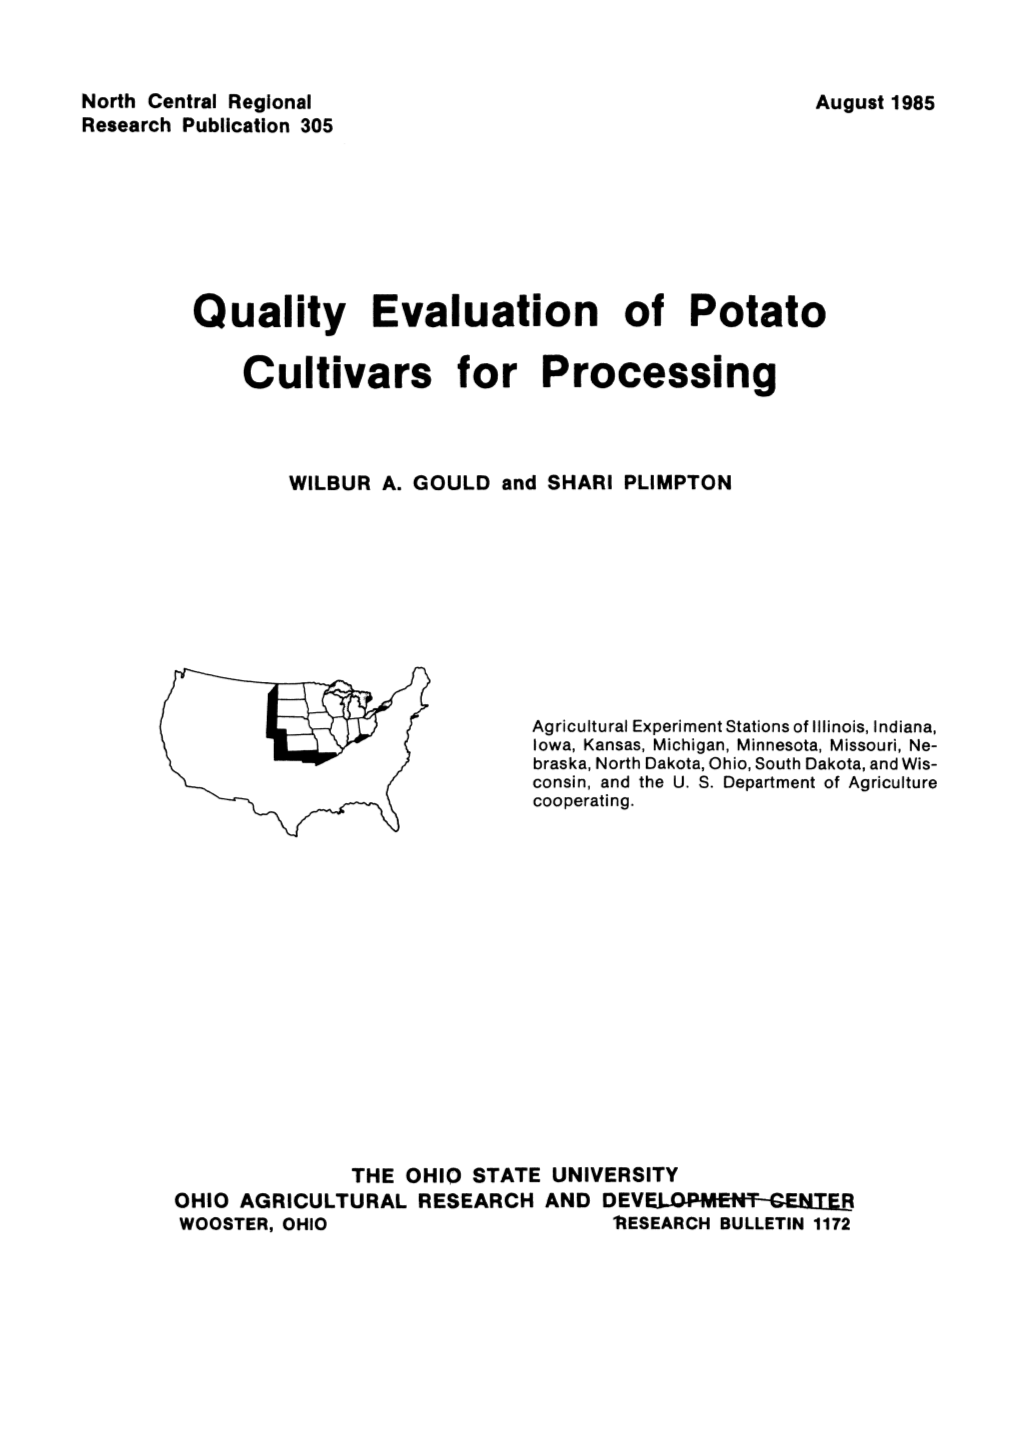 Quality Evaluation of Potato Cultivars for Processing